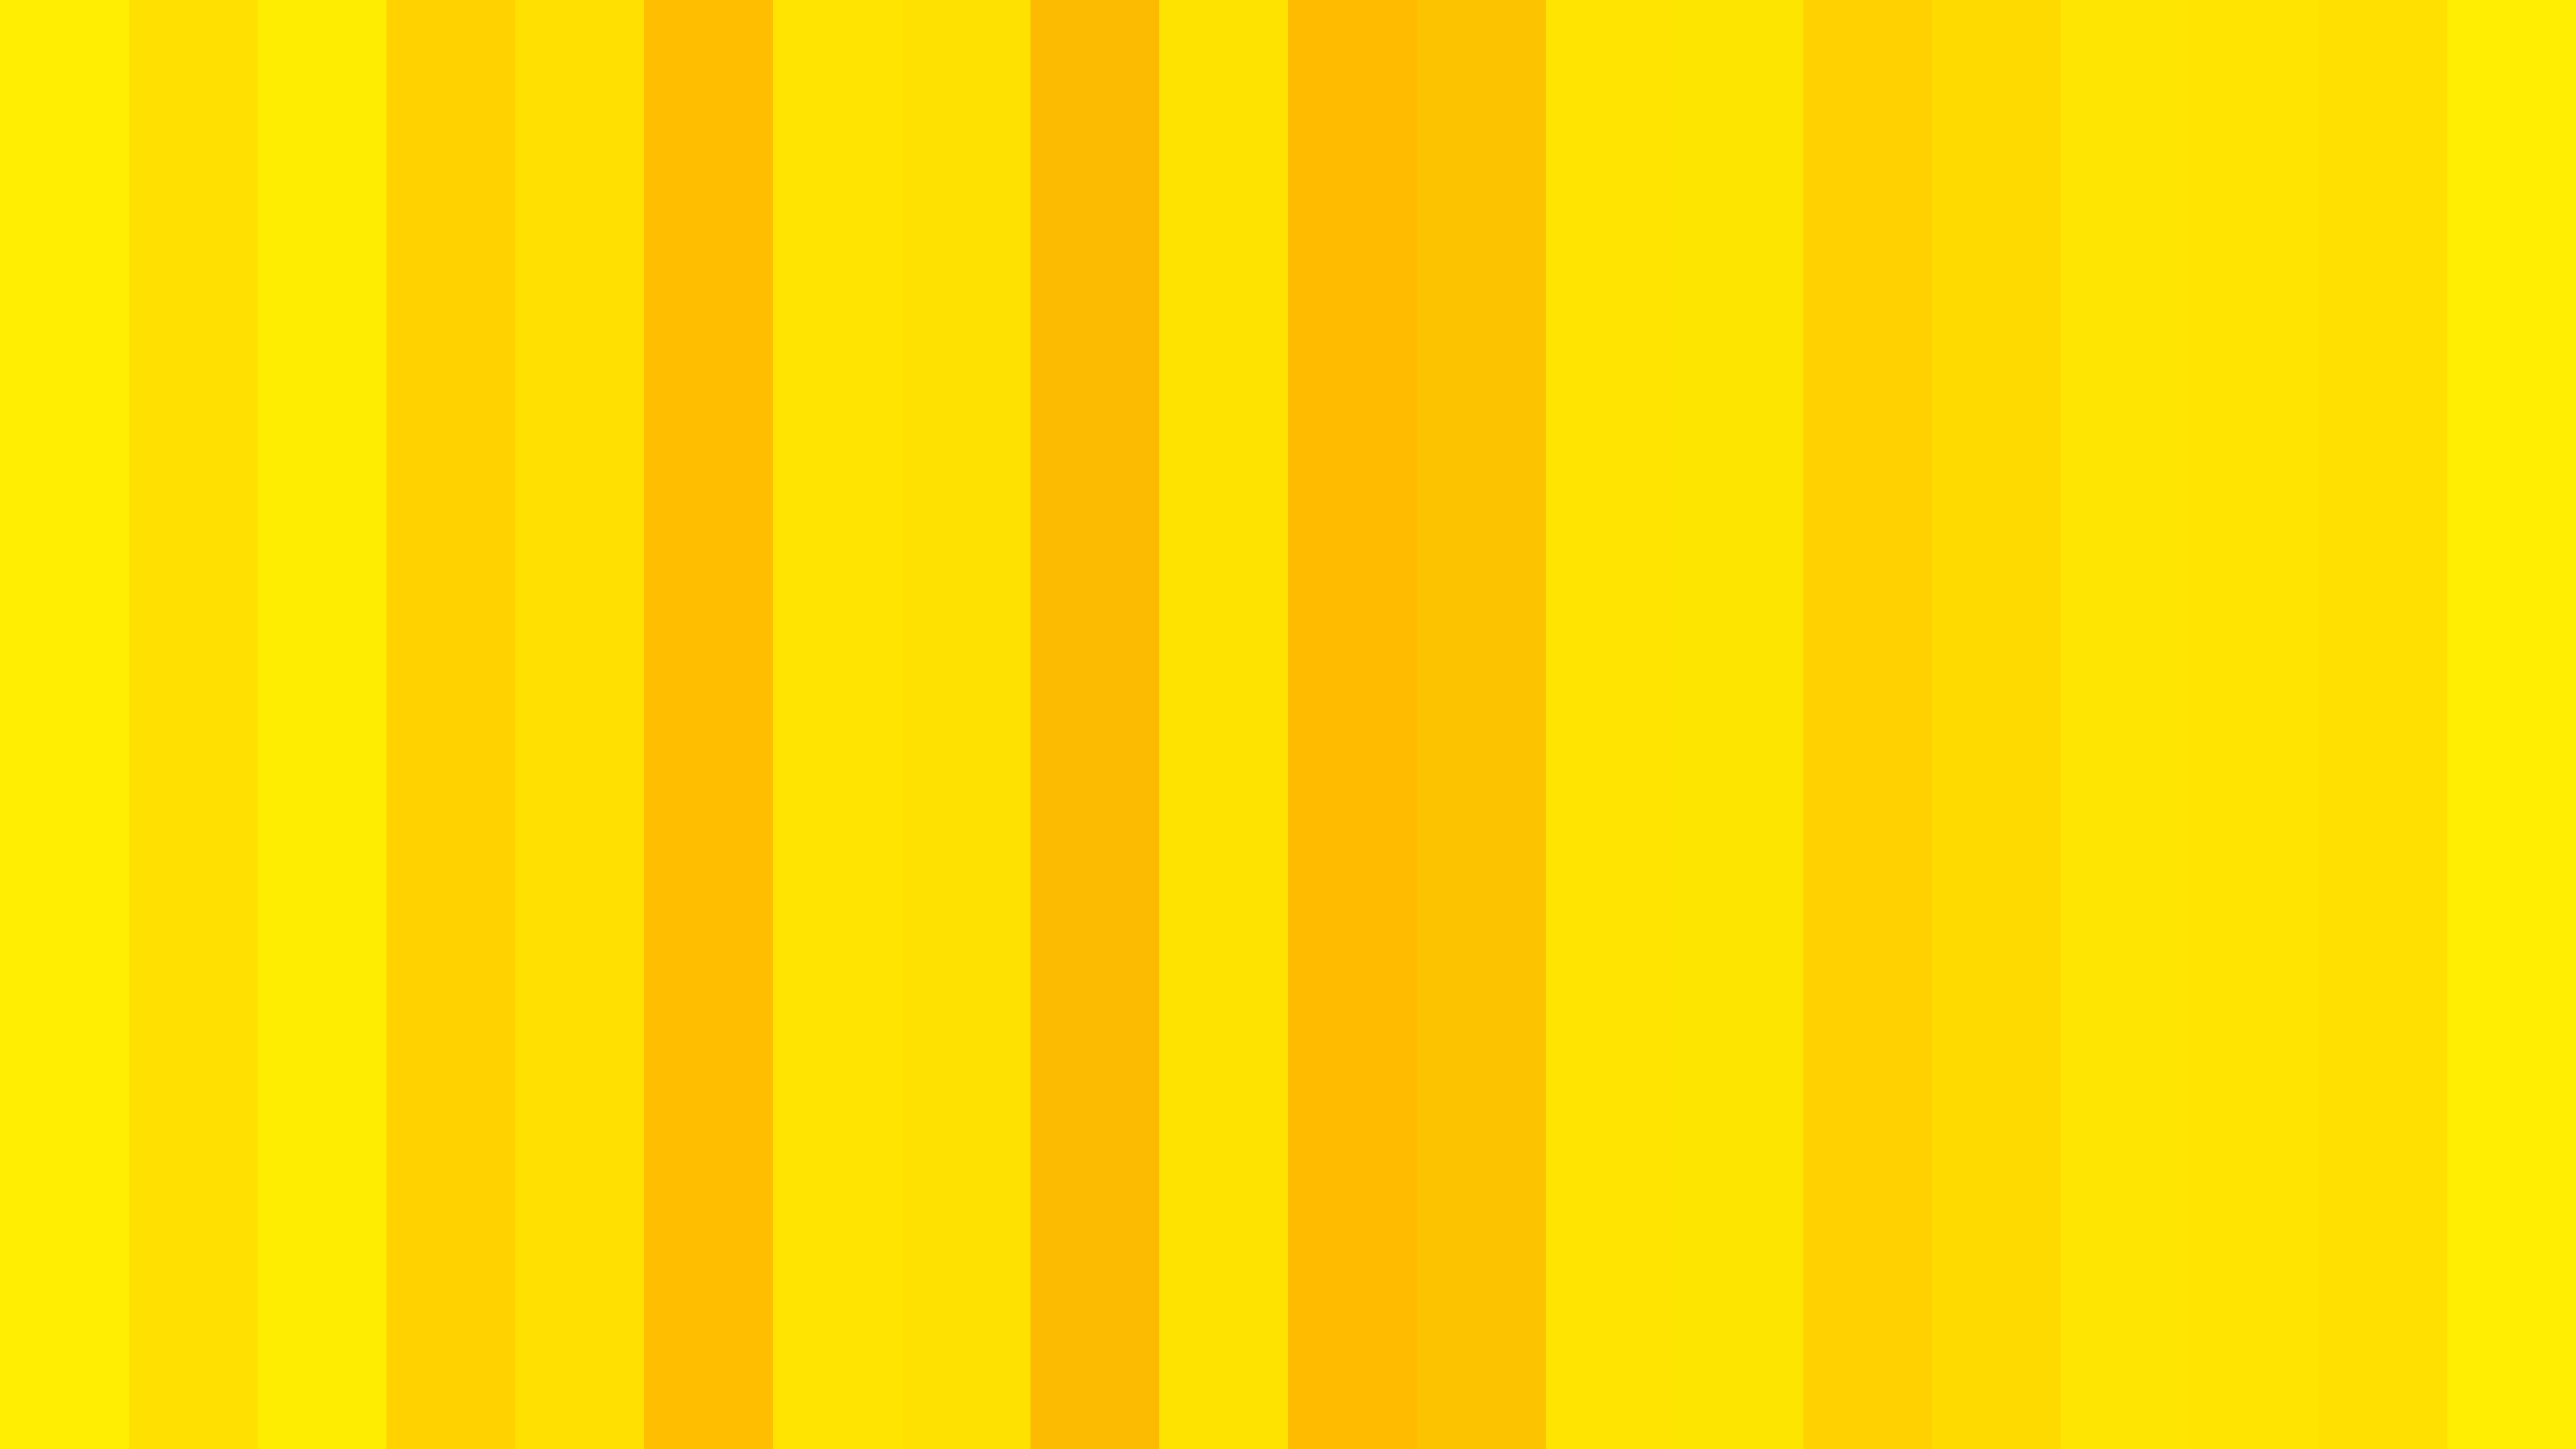 Orange And Yellow Striped Background Image